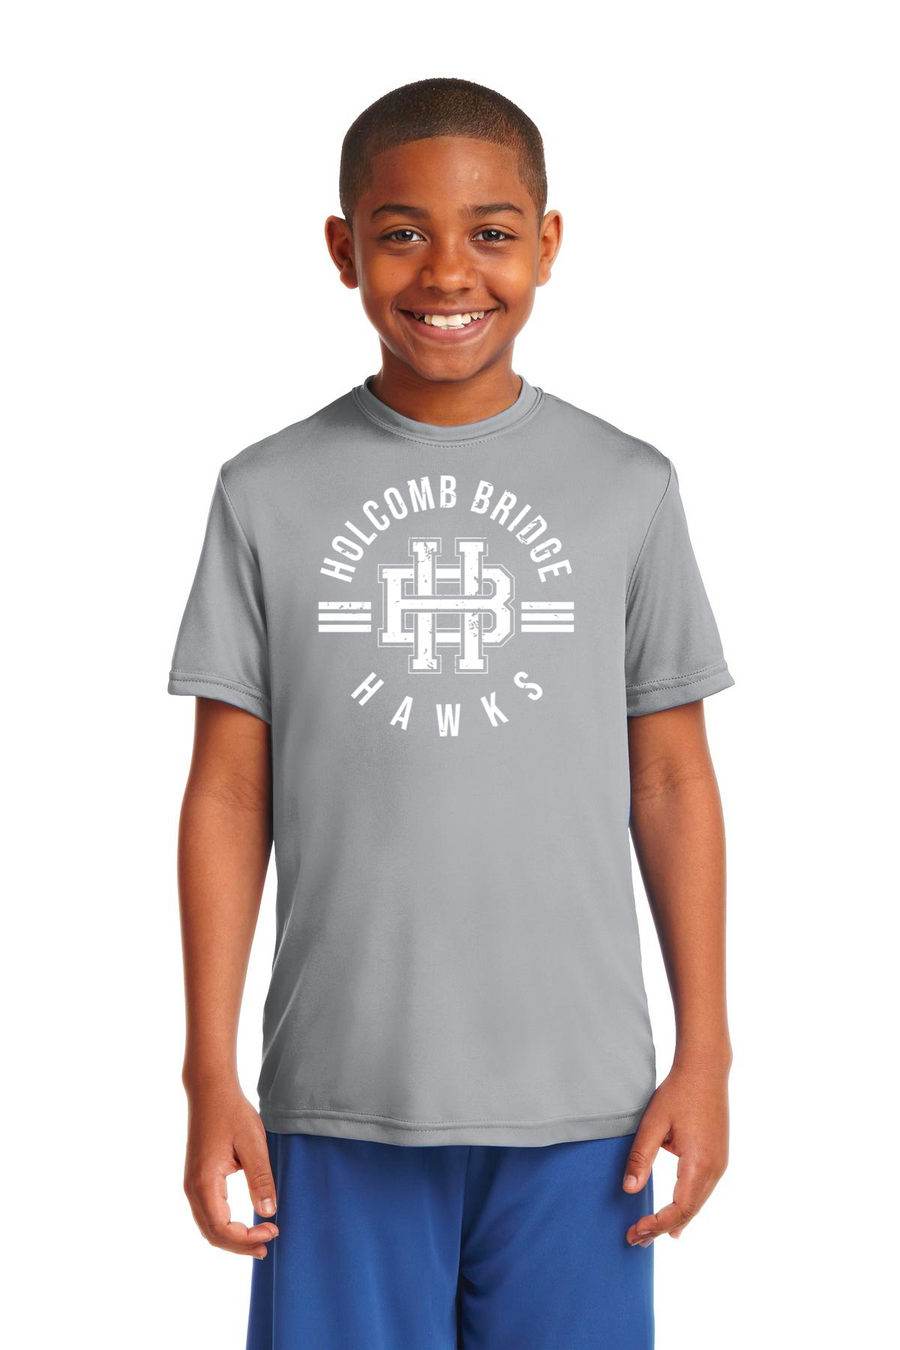 Holcomb Bridge Middle School Spirit Wear 23/24 On-Demand-Unisex Dry-Fit Shirt HB White Logo